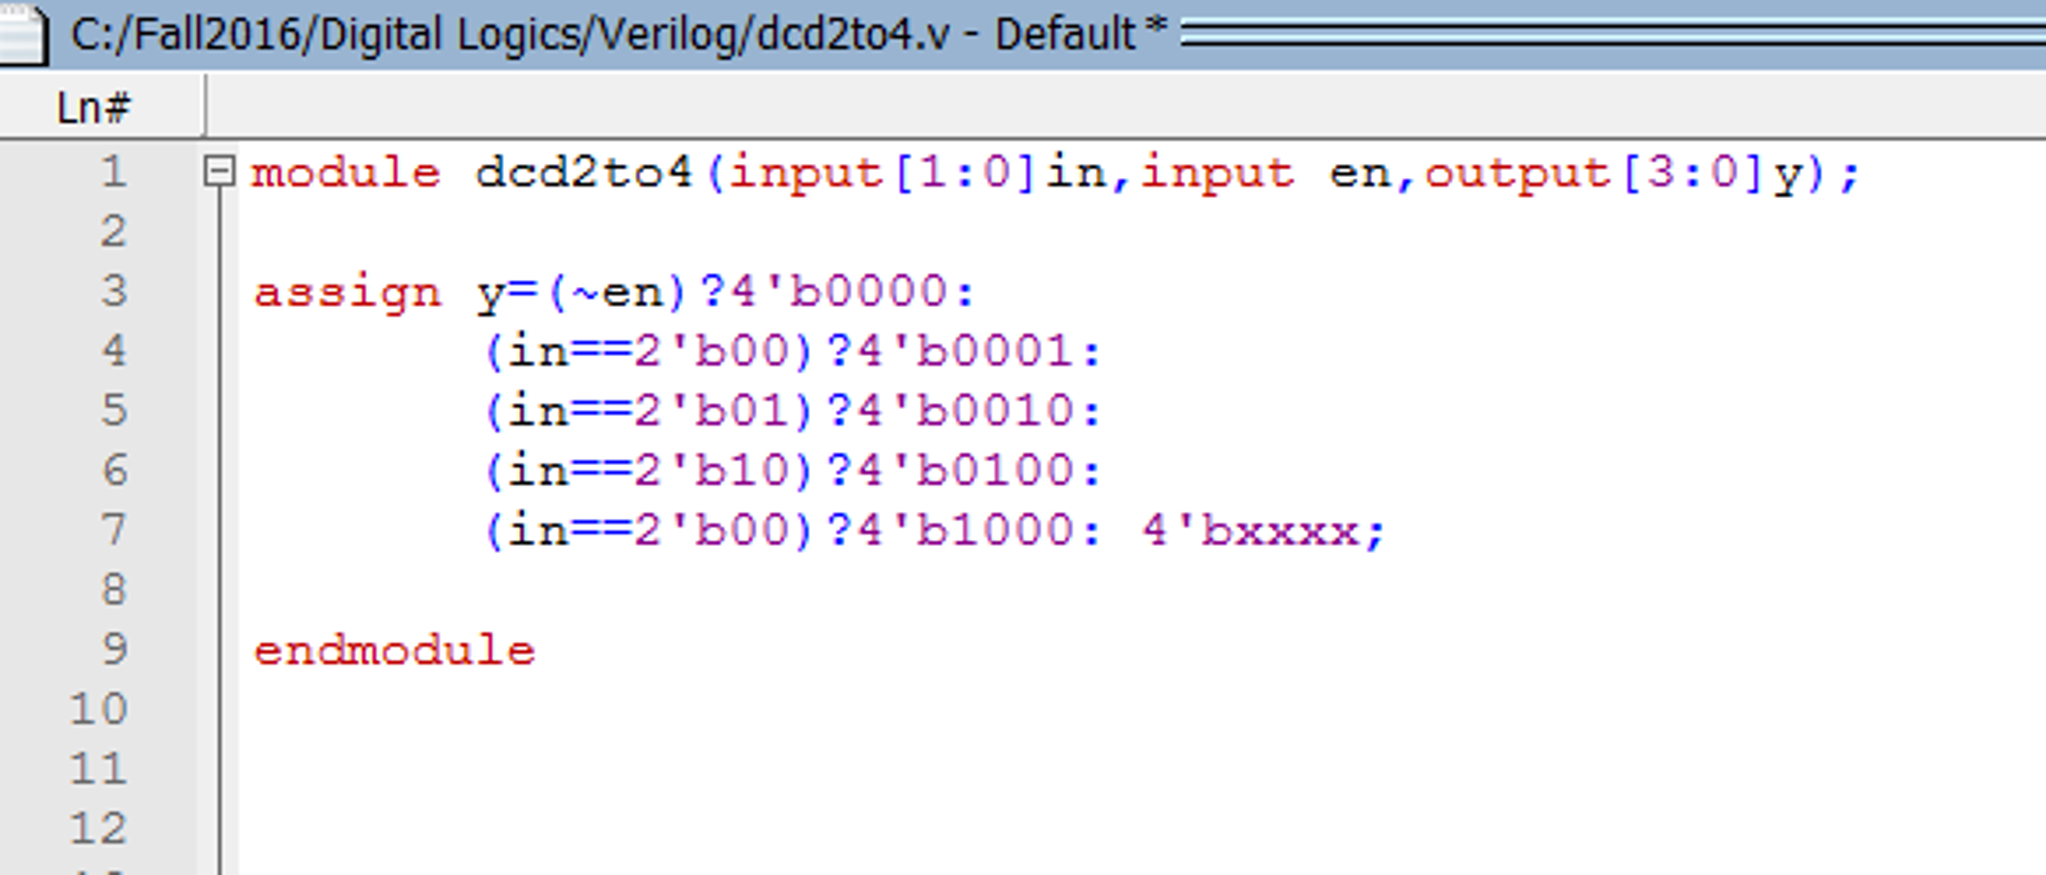 4 to 16 decoder using 2 to 4 decoder verilog code